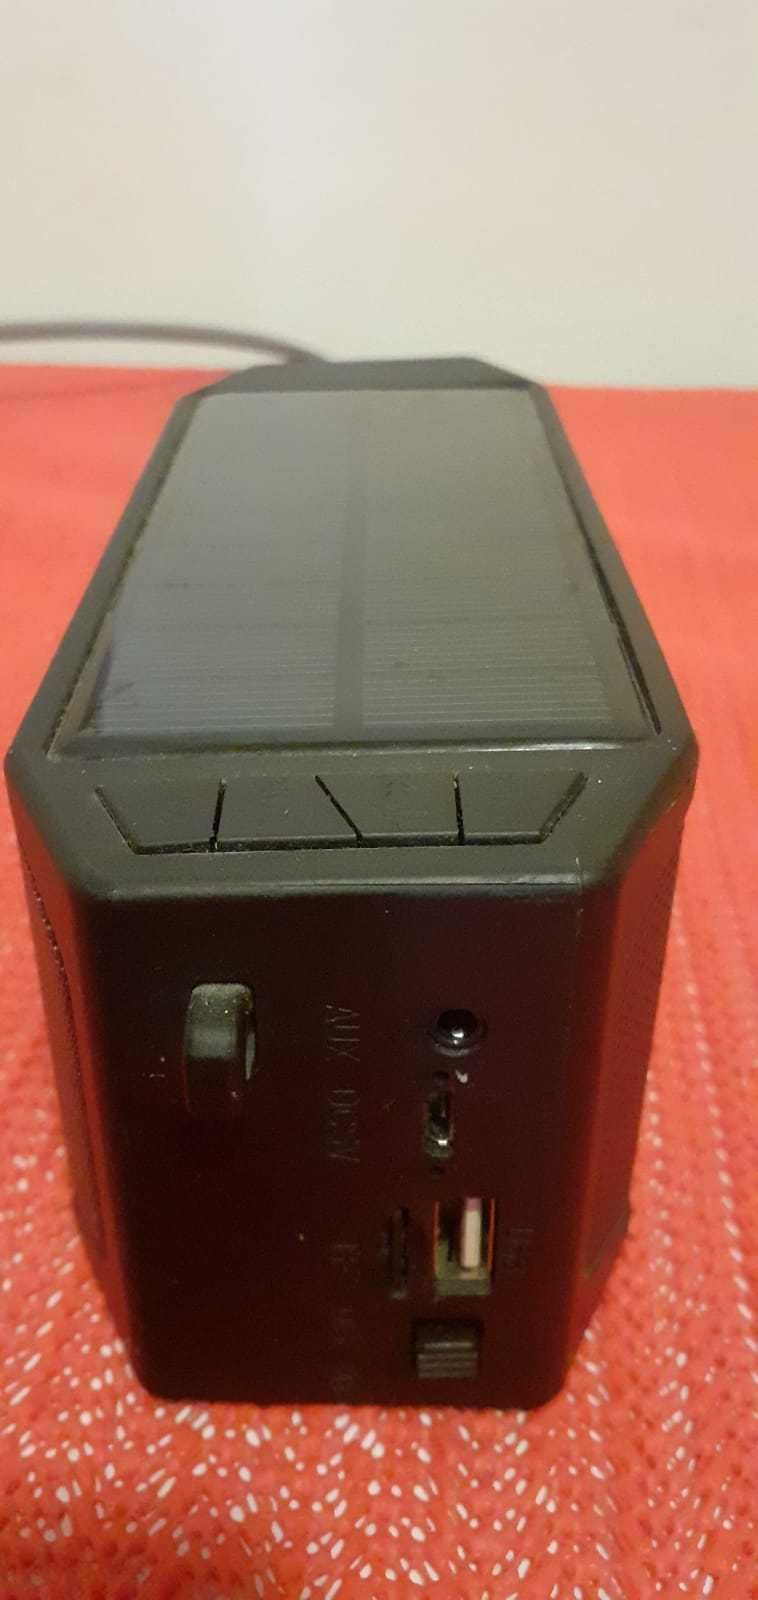 ZX-1617 difuzor solar Auvisio cu Bluetooth 3.0,  power bank, 12 wați